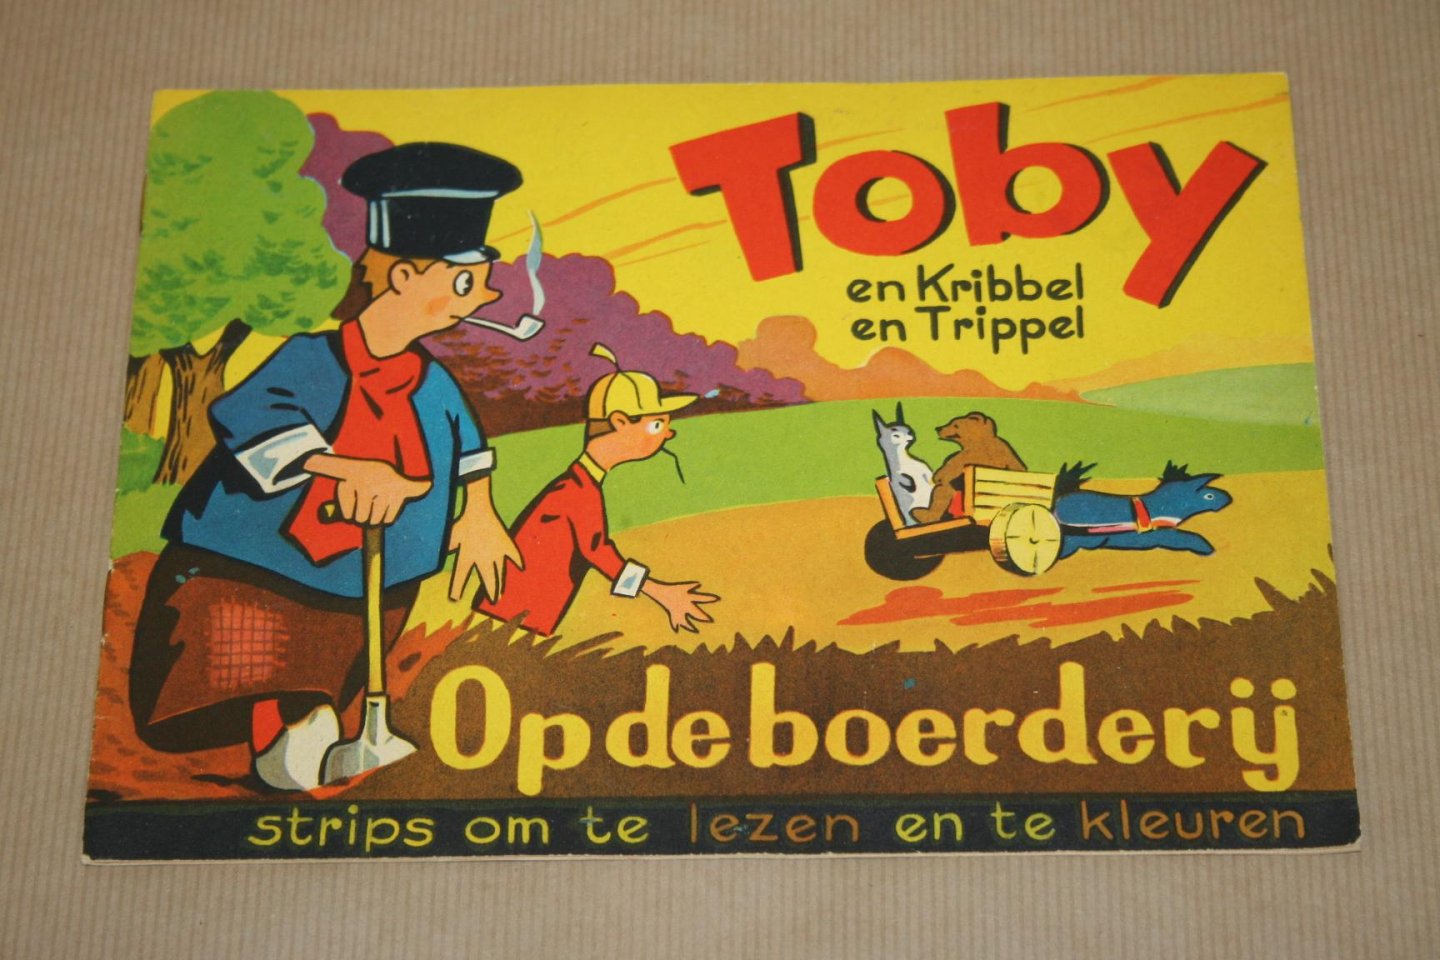  - Toby en Kribbel en Trippel - Op de boerderij  (Strips om te lezen en te kleuren)